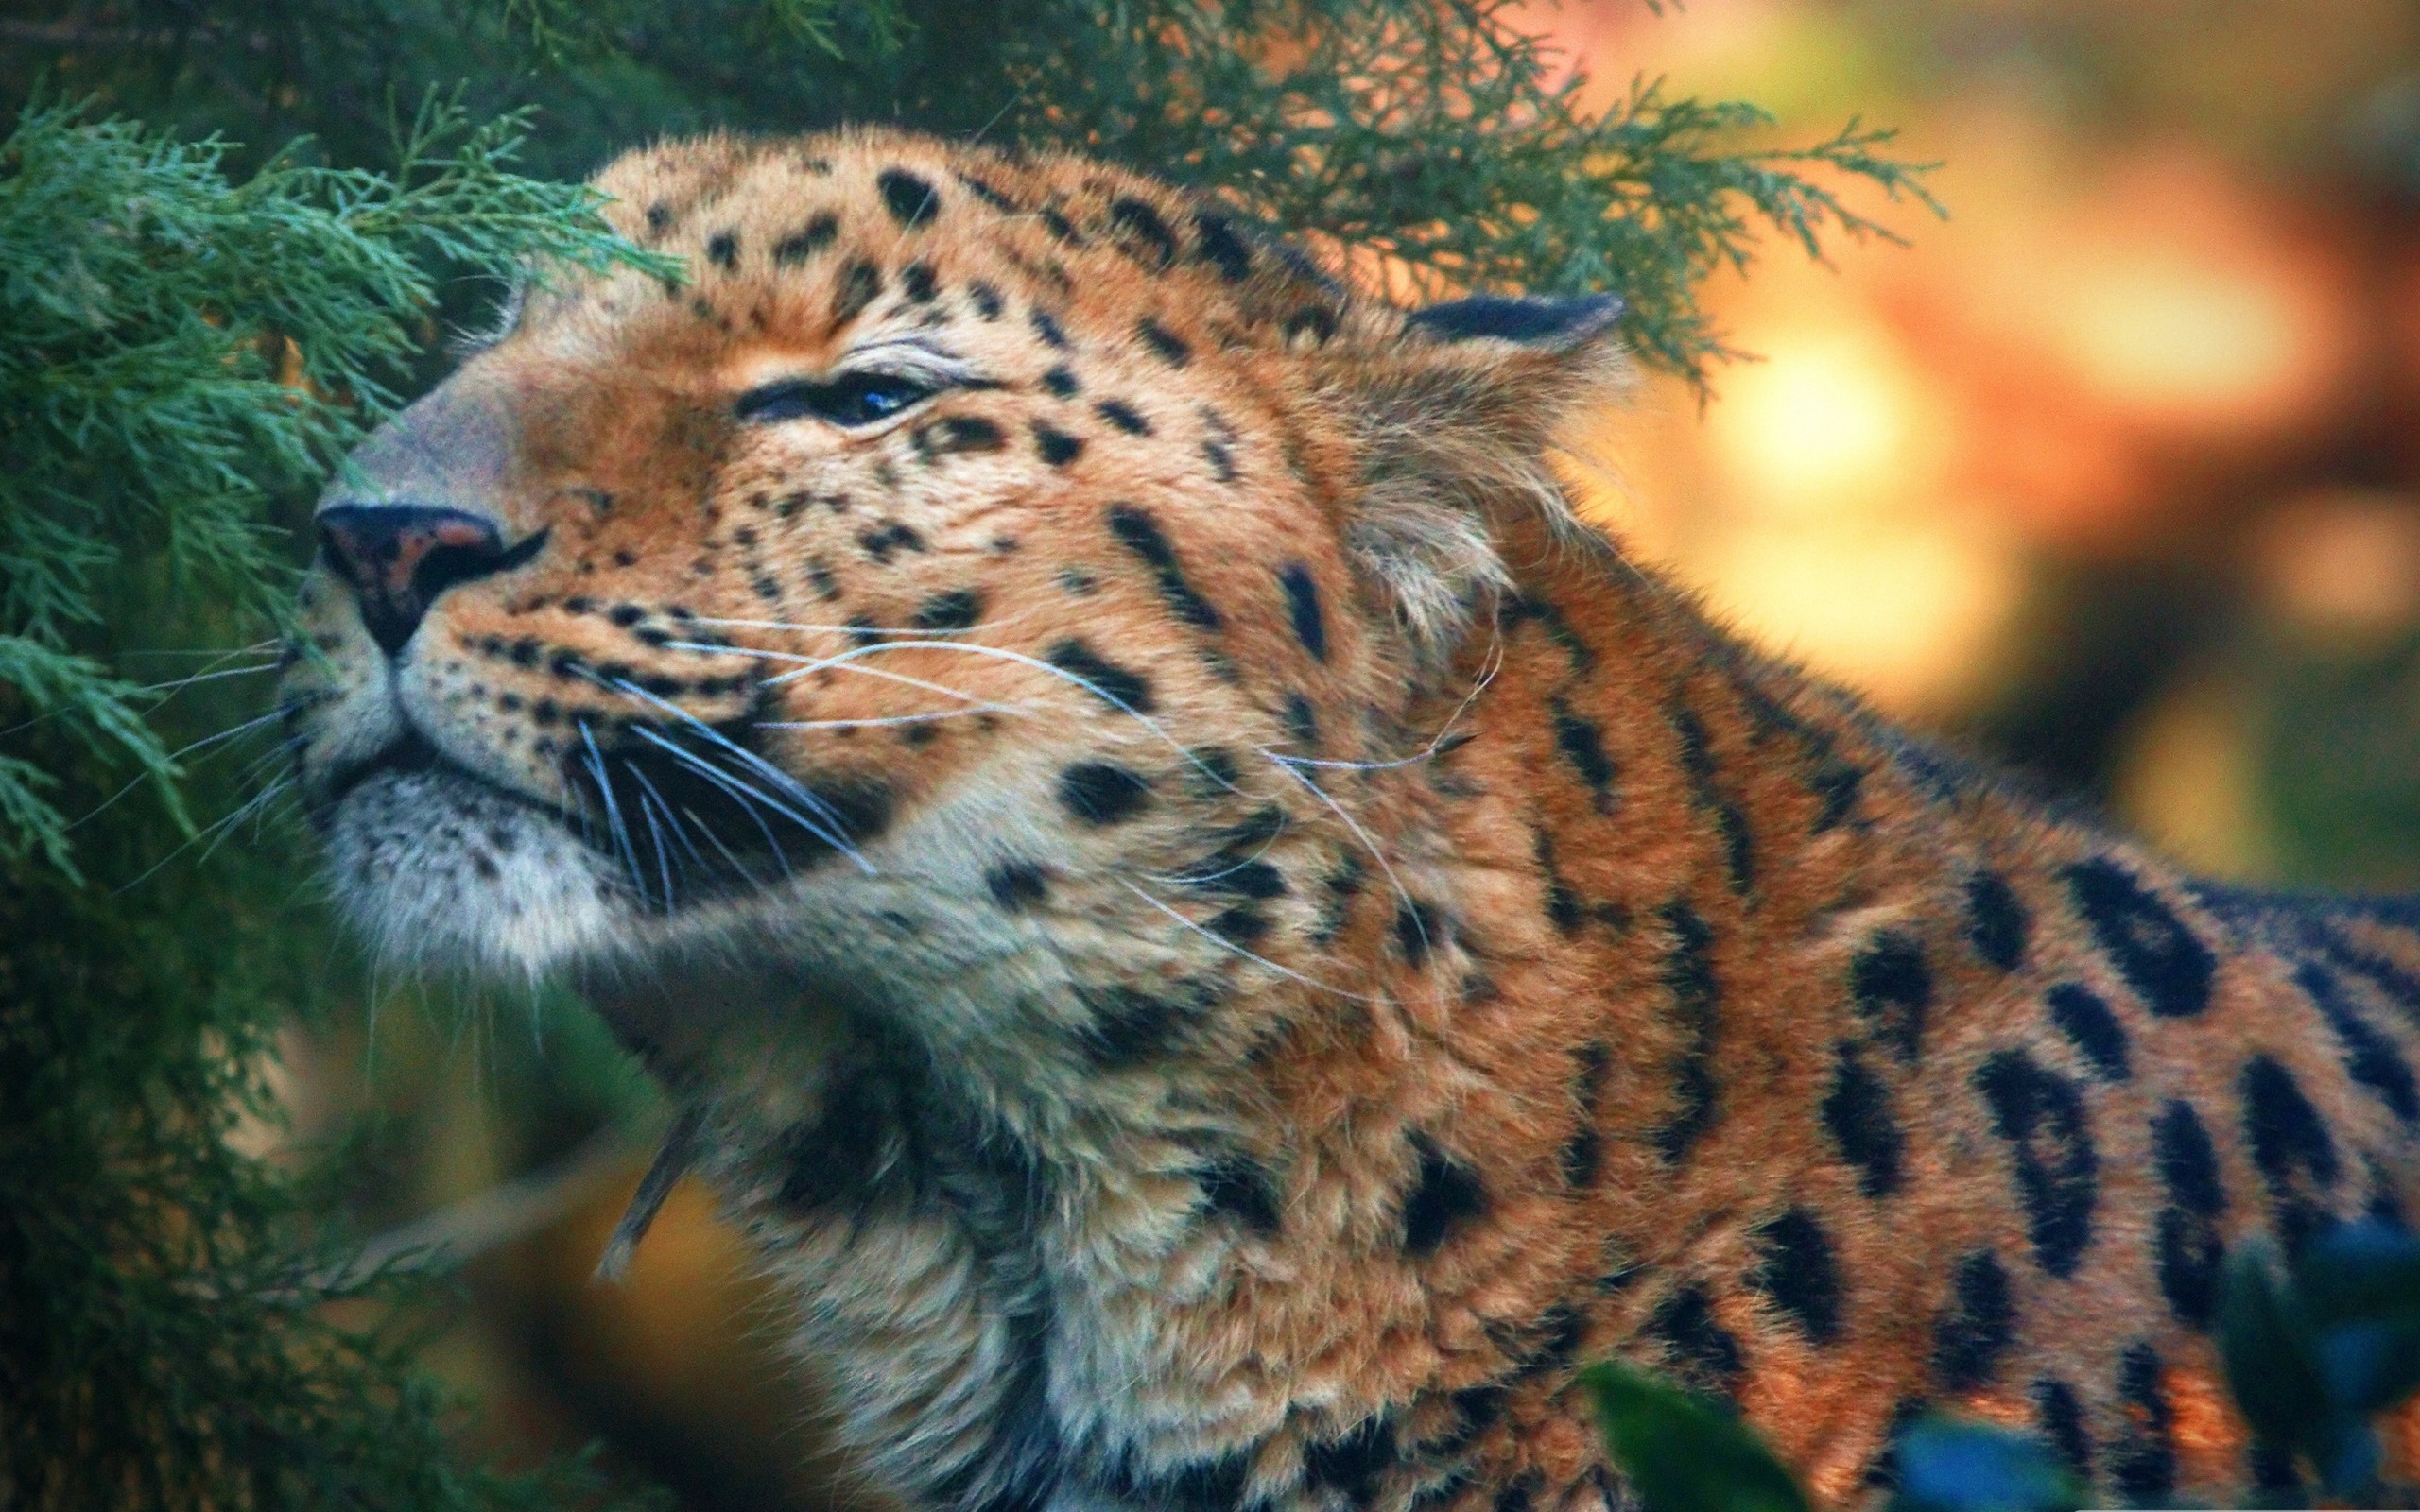 General 2560x1600 leopard big cats animals mammals closeup blurry background blurred whiskers fur